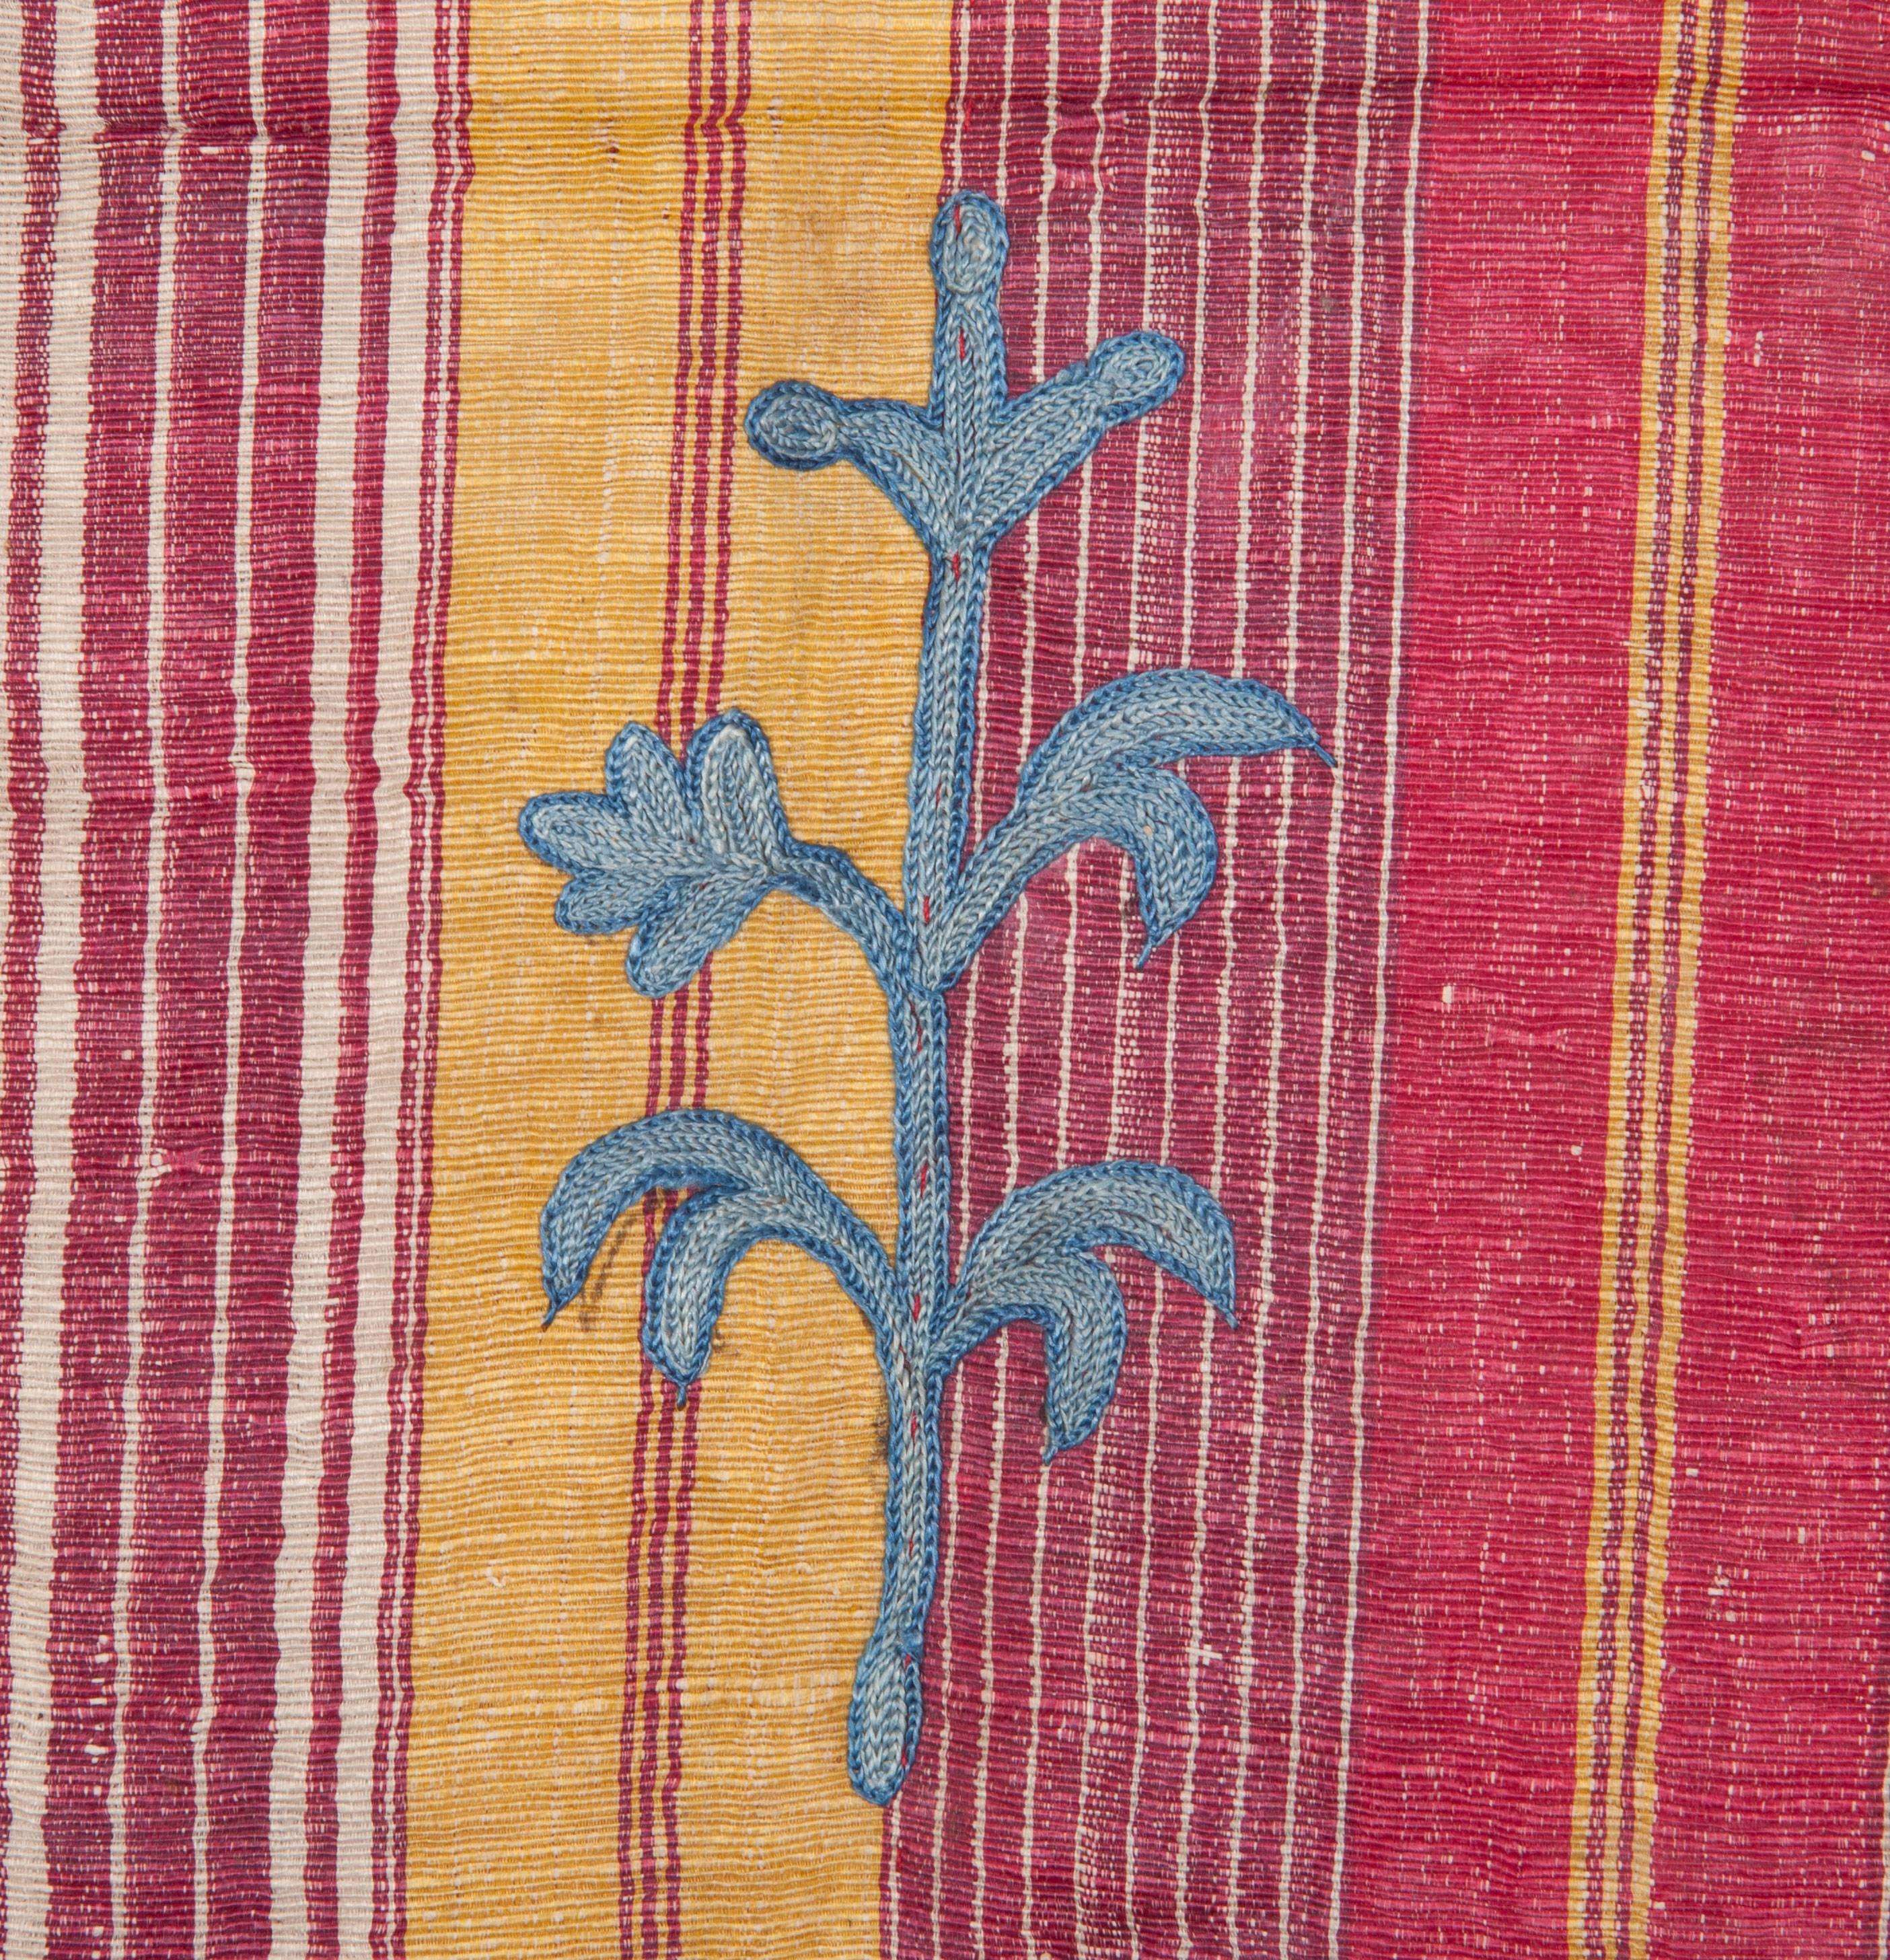 Embroidered 19th Century Uzbek Suzani, Silk Embroidery on a Silk Hand Woven Silk Textile